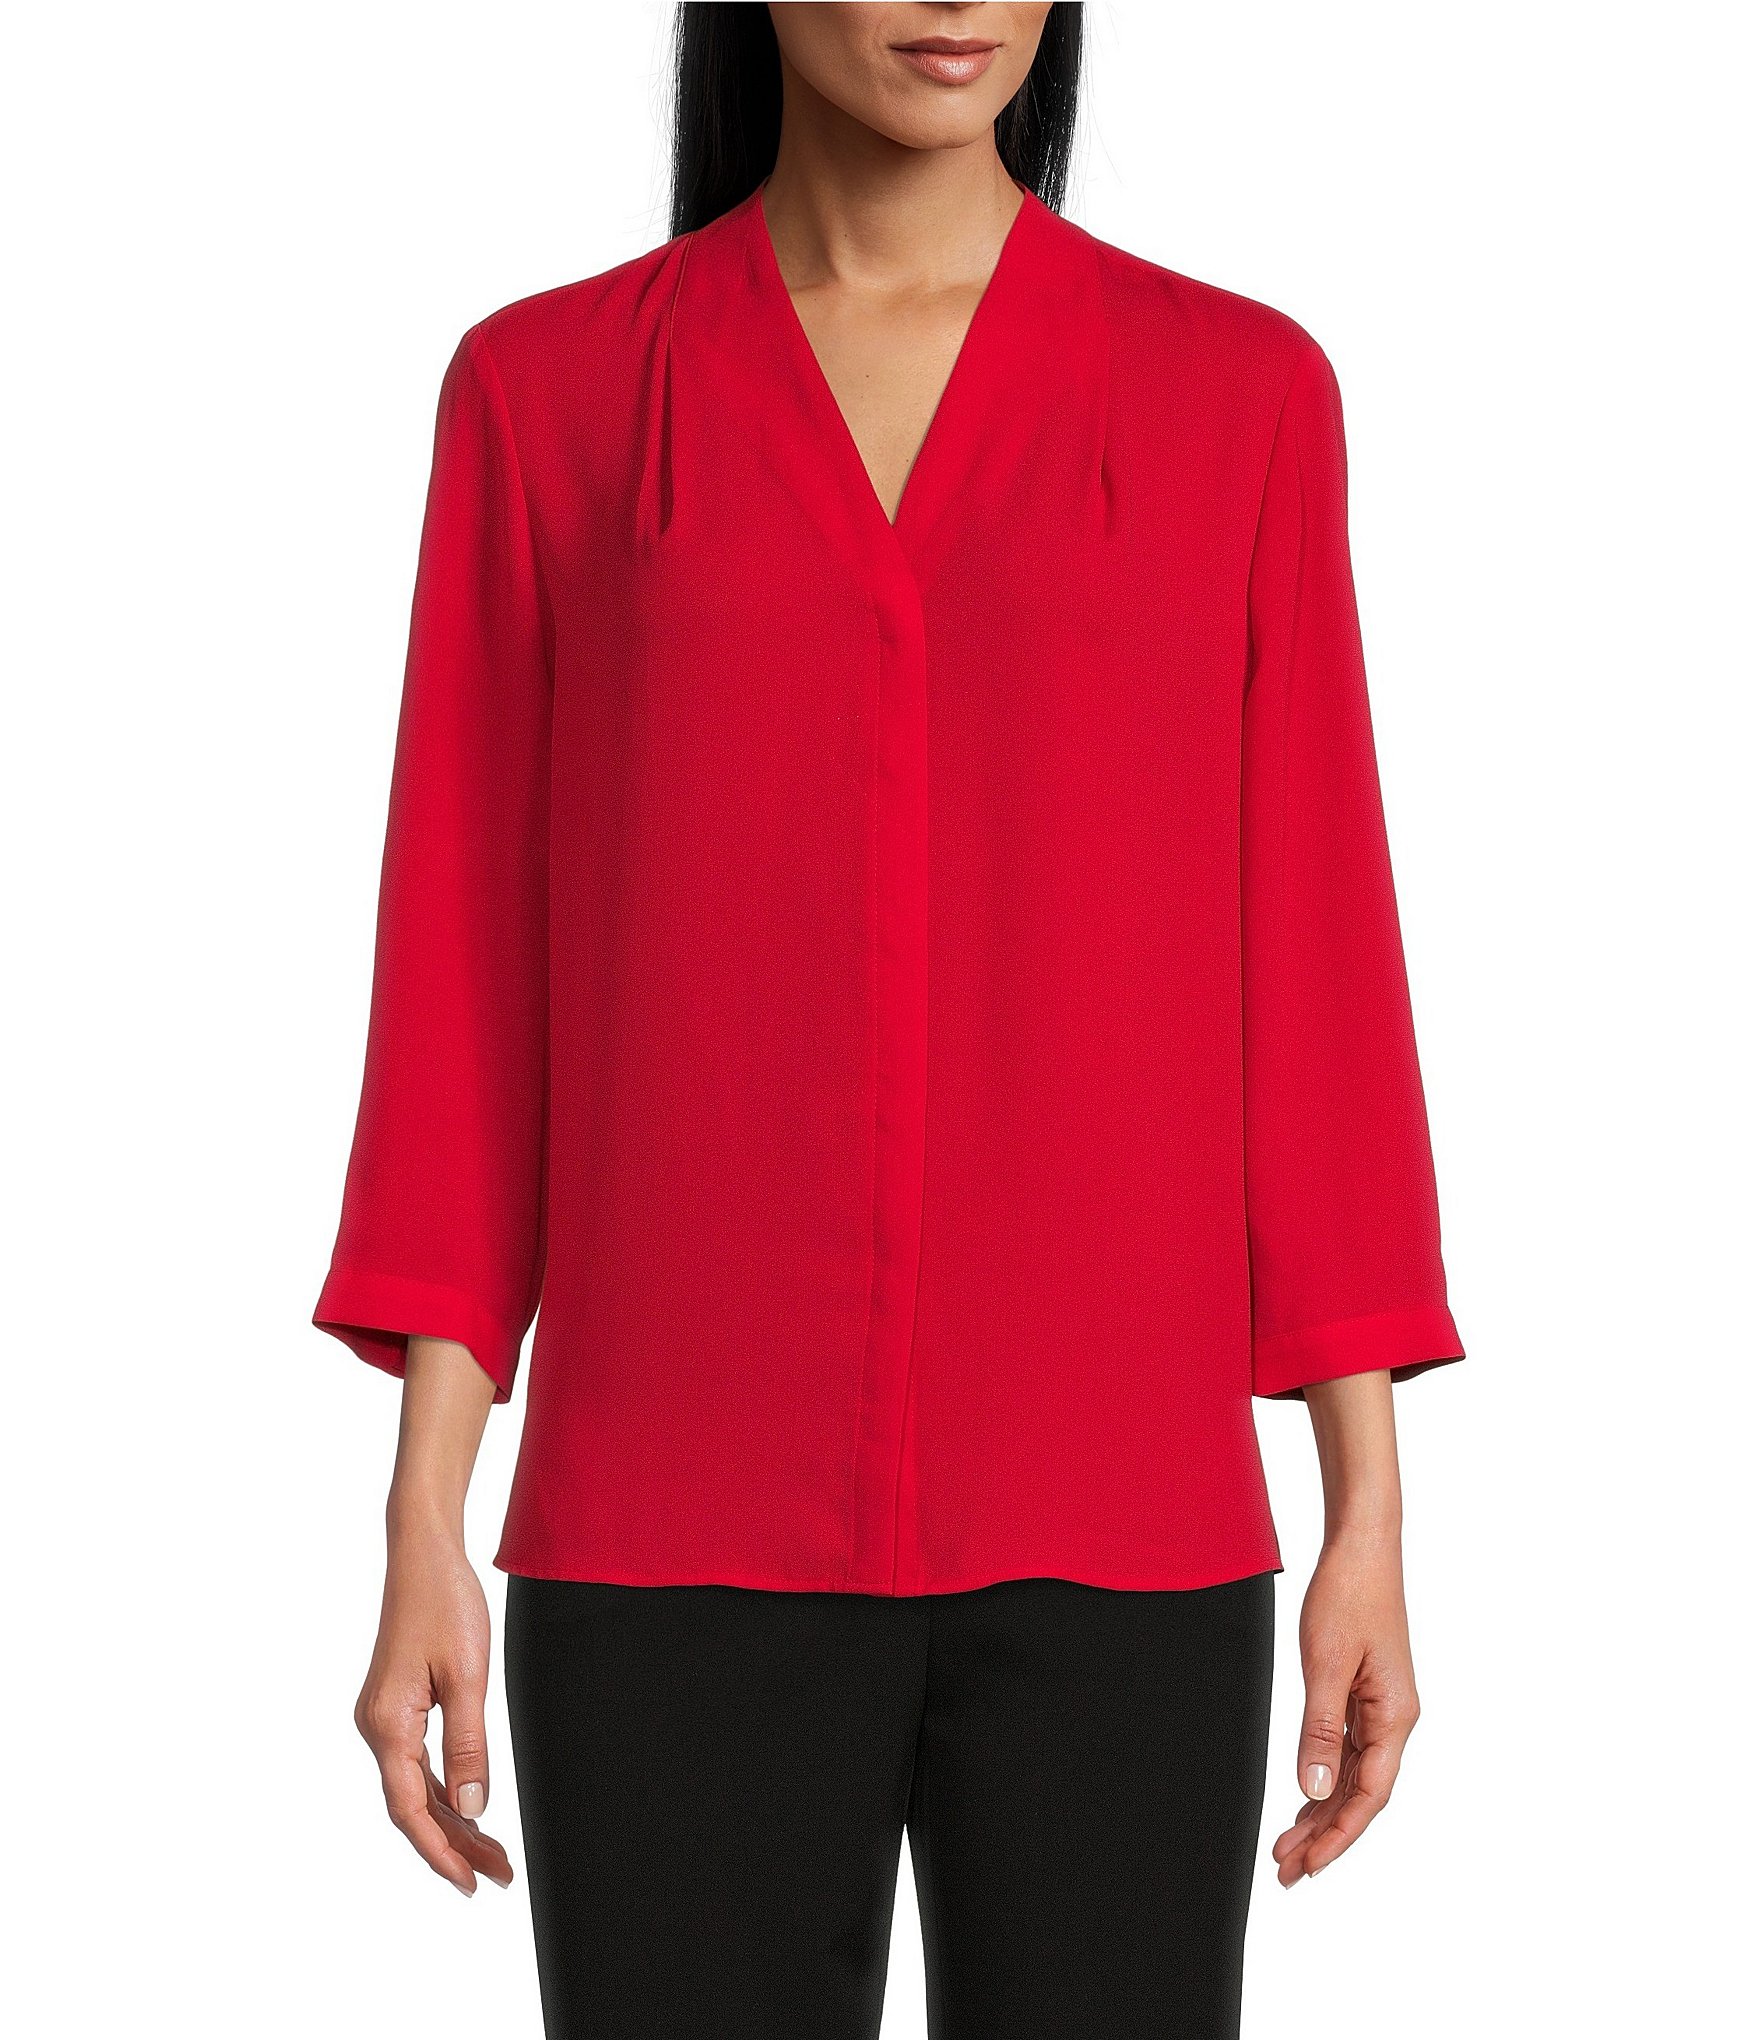 Red Petite Casual & Dressy Tops & Blouses | Dillard's